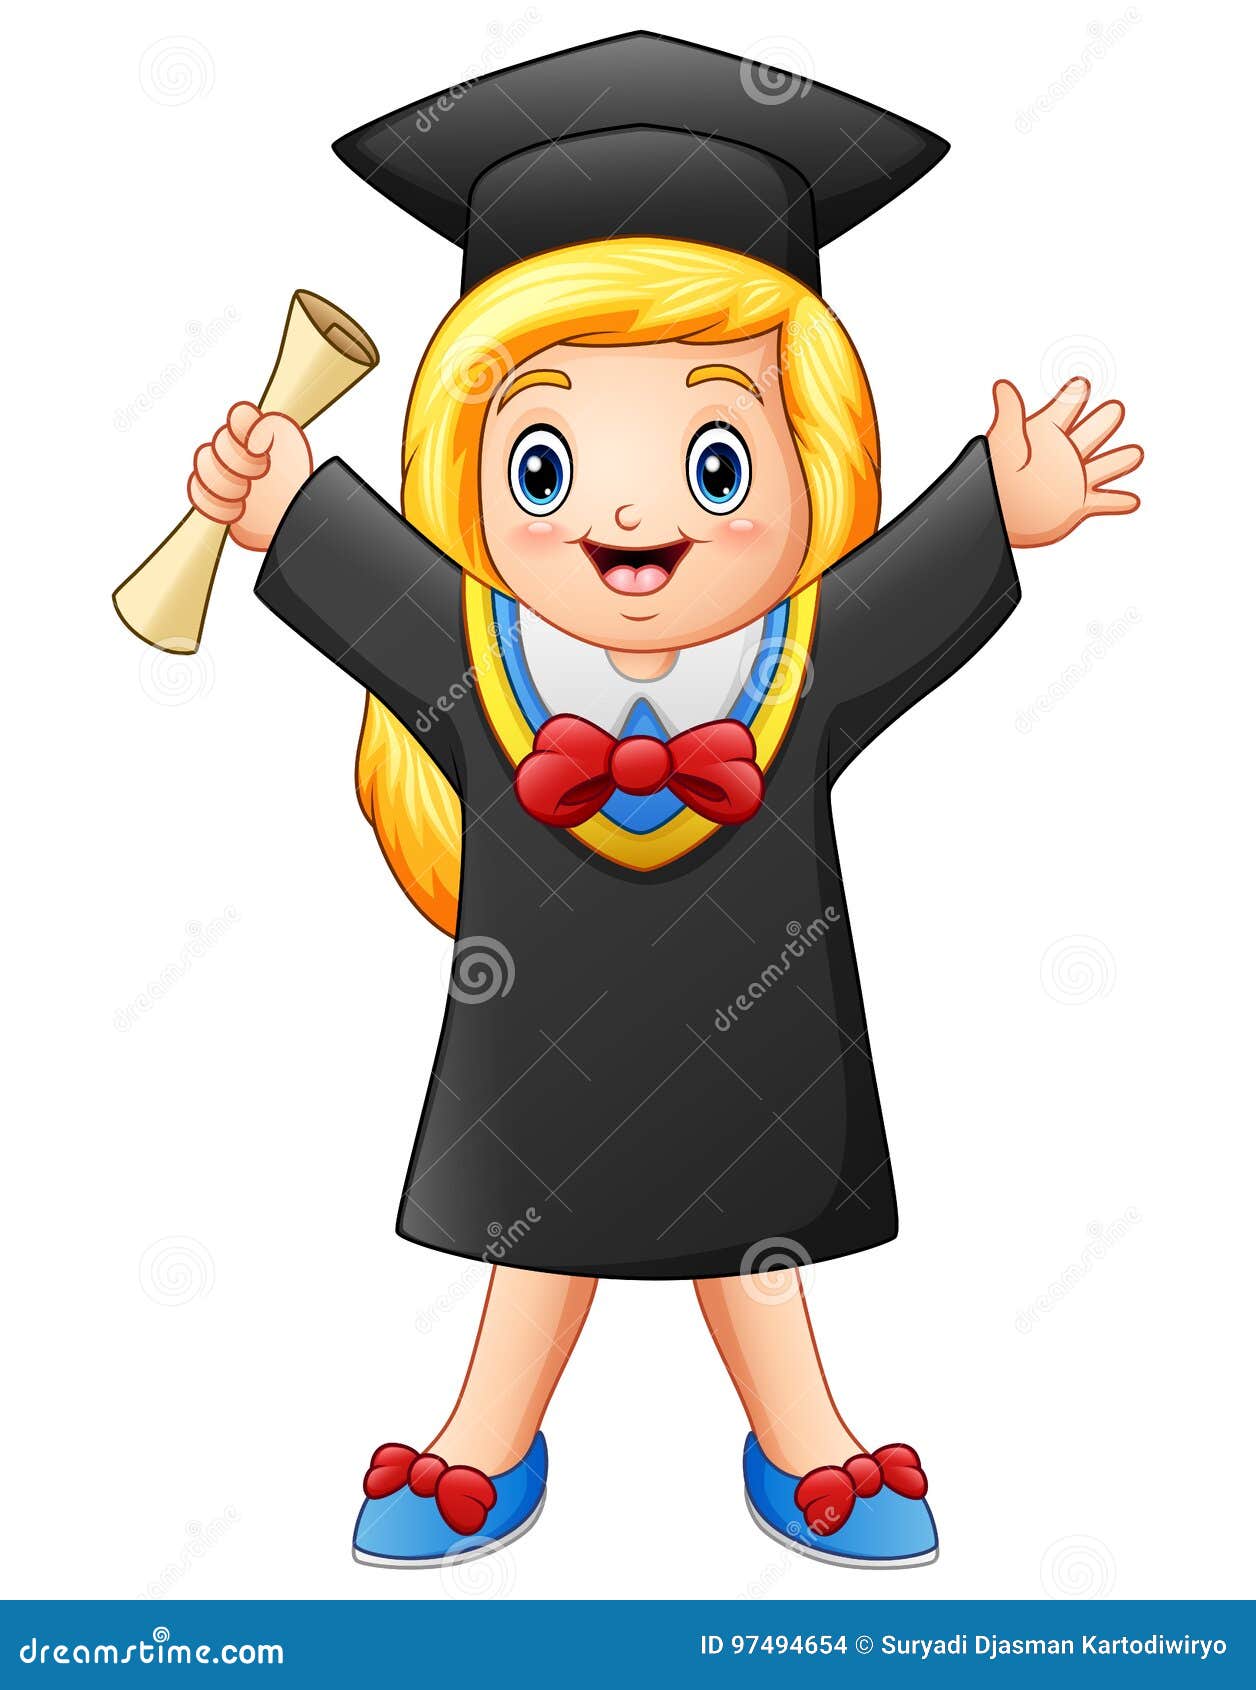 Cartoon Graduate Girl with Diploma Stock Vector - Illustration of cartoon,  graduation: 97494654